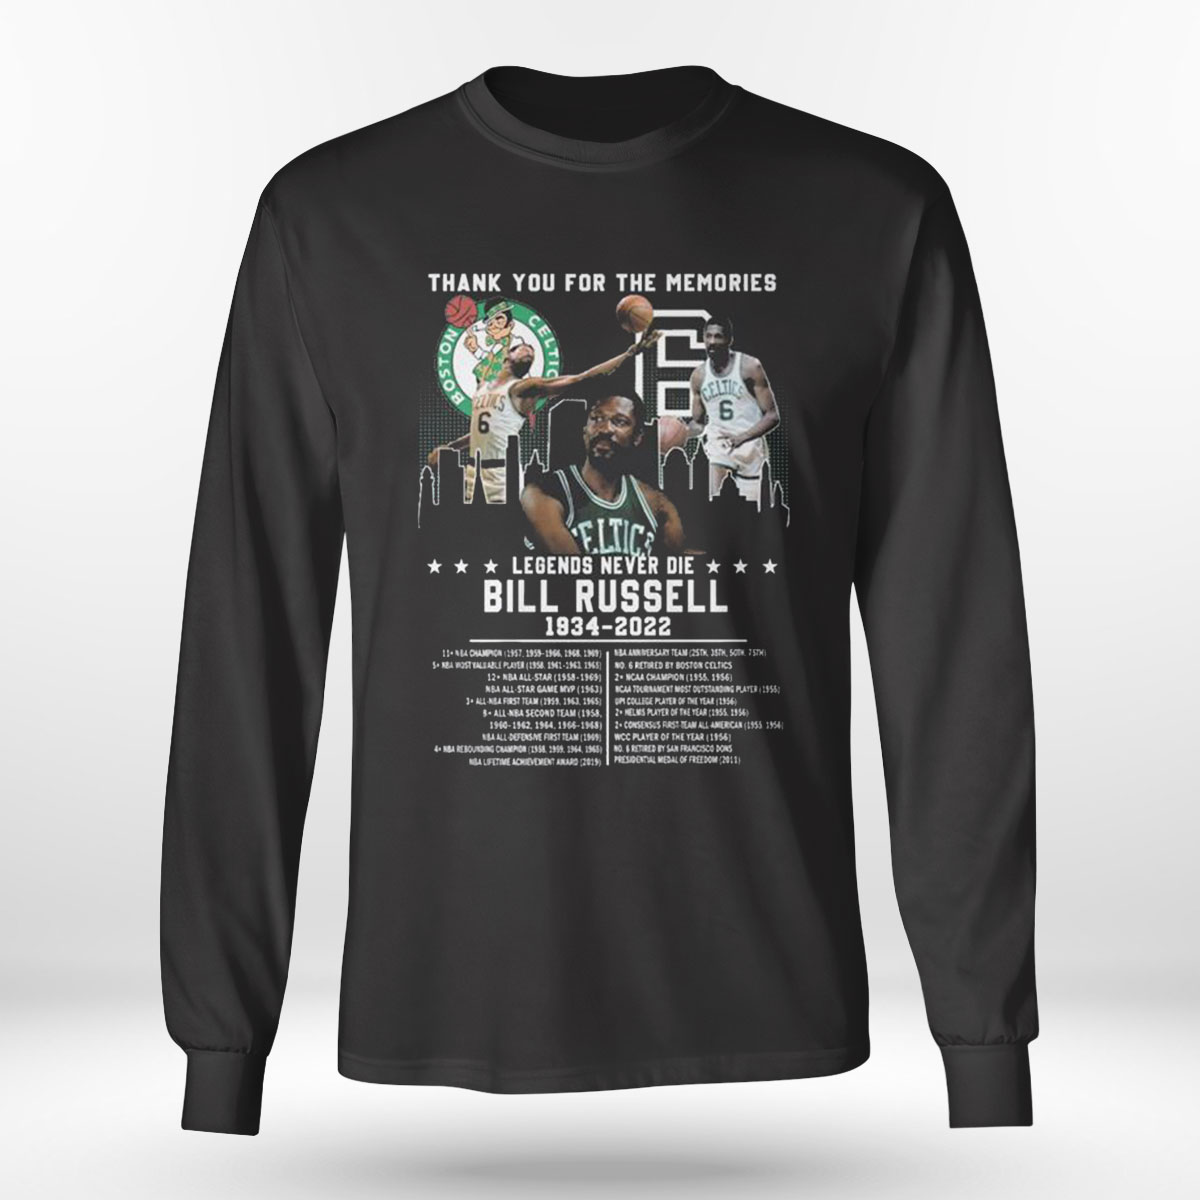 Boston Celtics Gray NBA Sweatshirts for sale